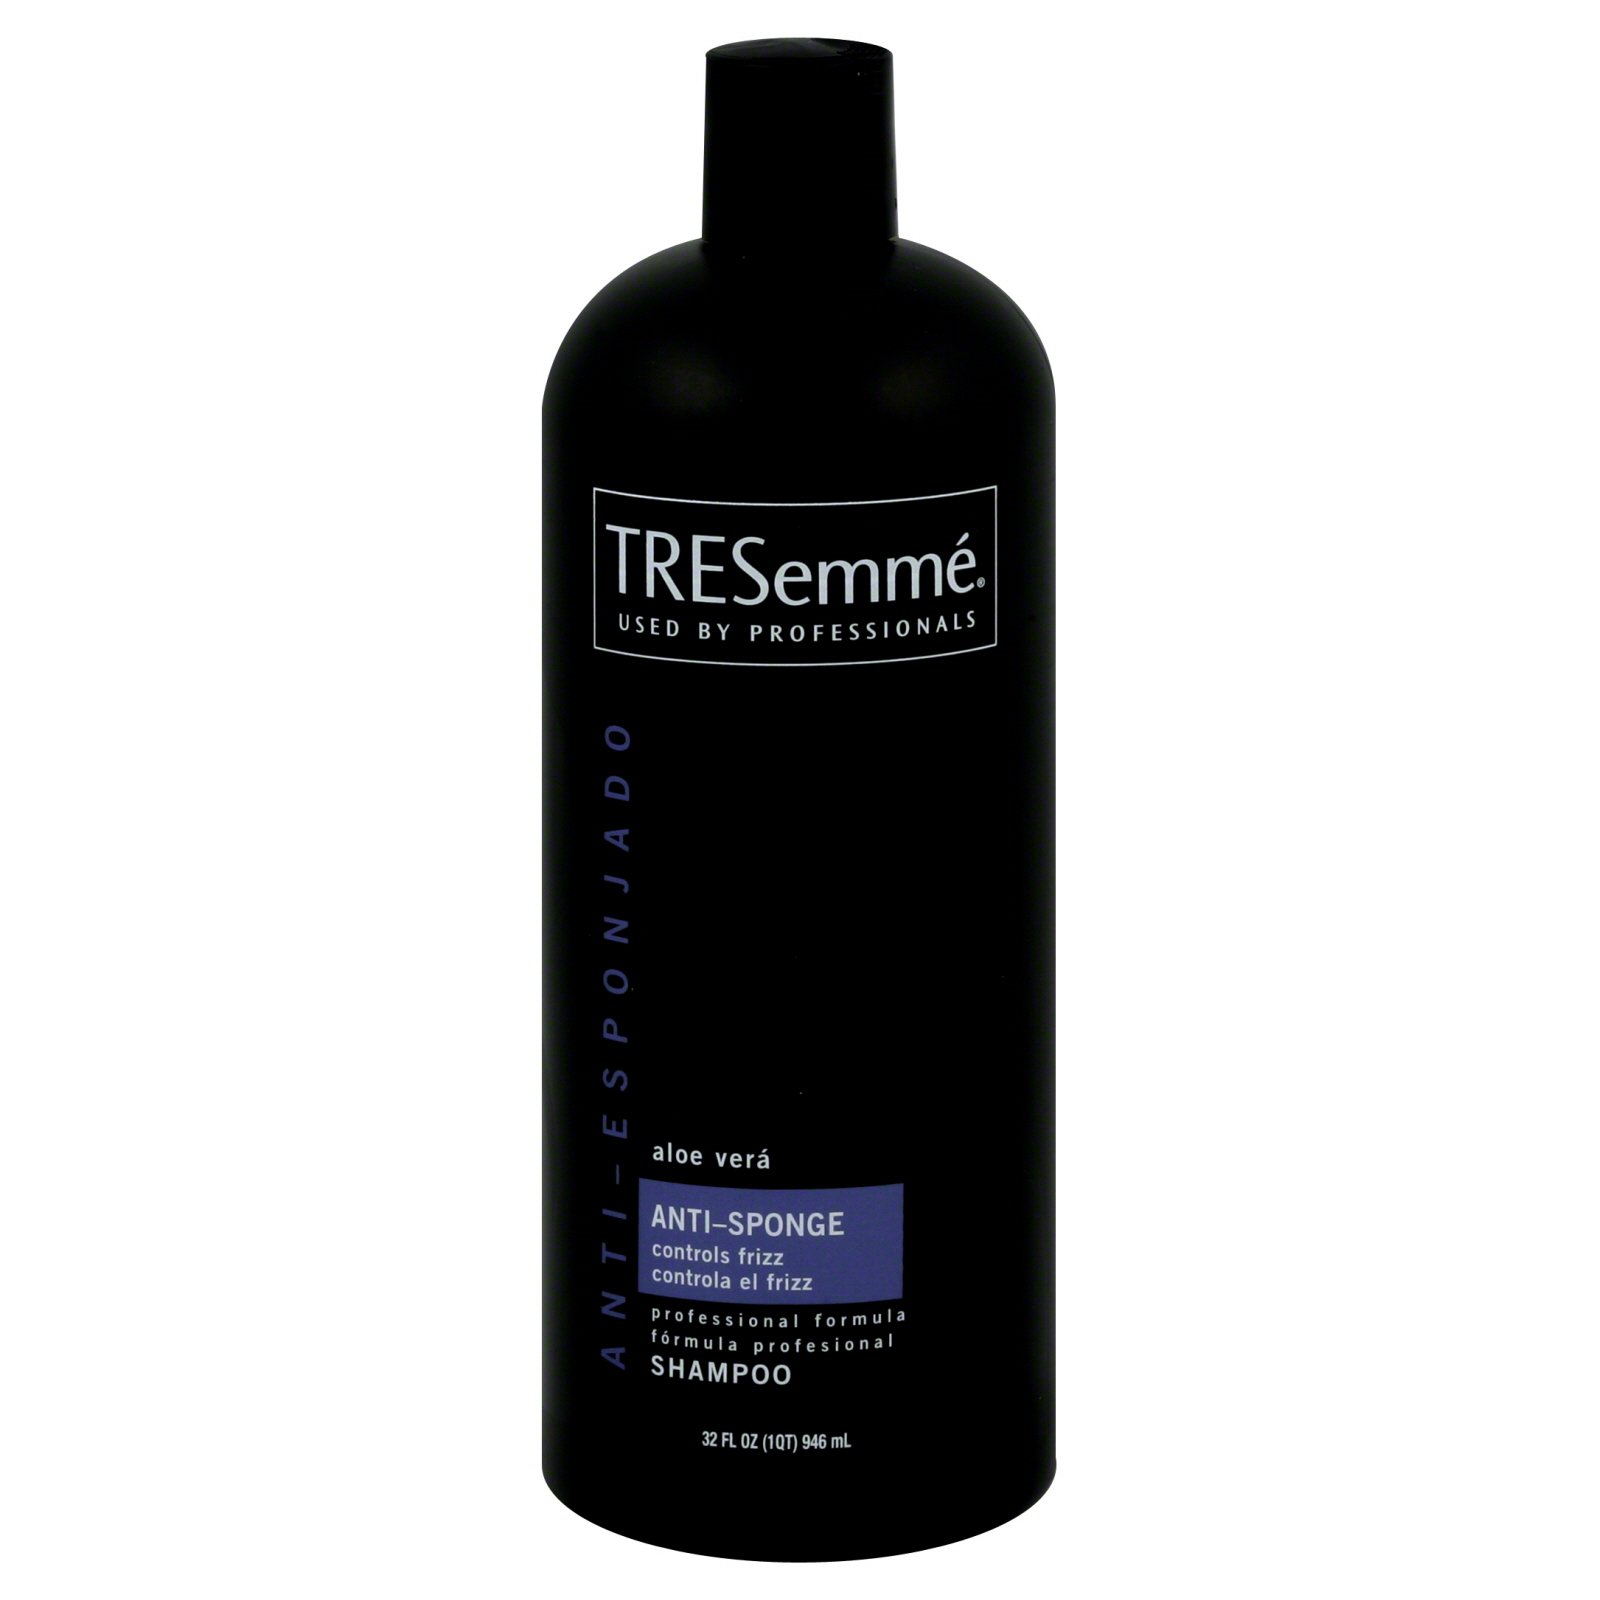 TRESemme Anti-Sponge Shampoo, 32 fl oz (1 qt) 946 ml